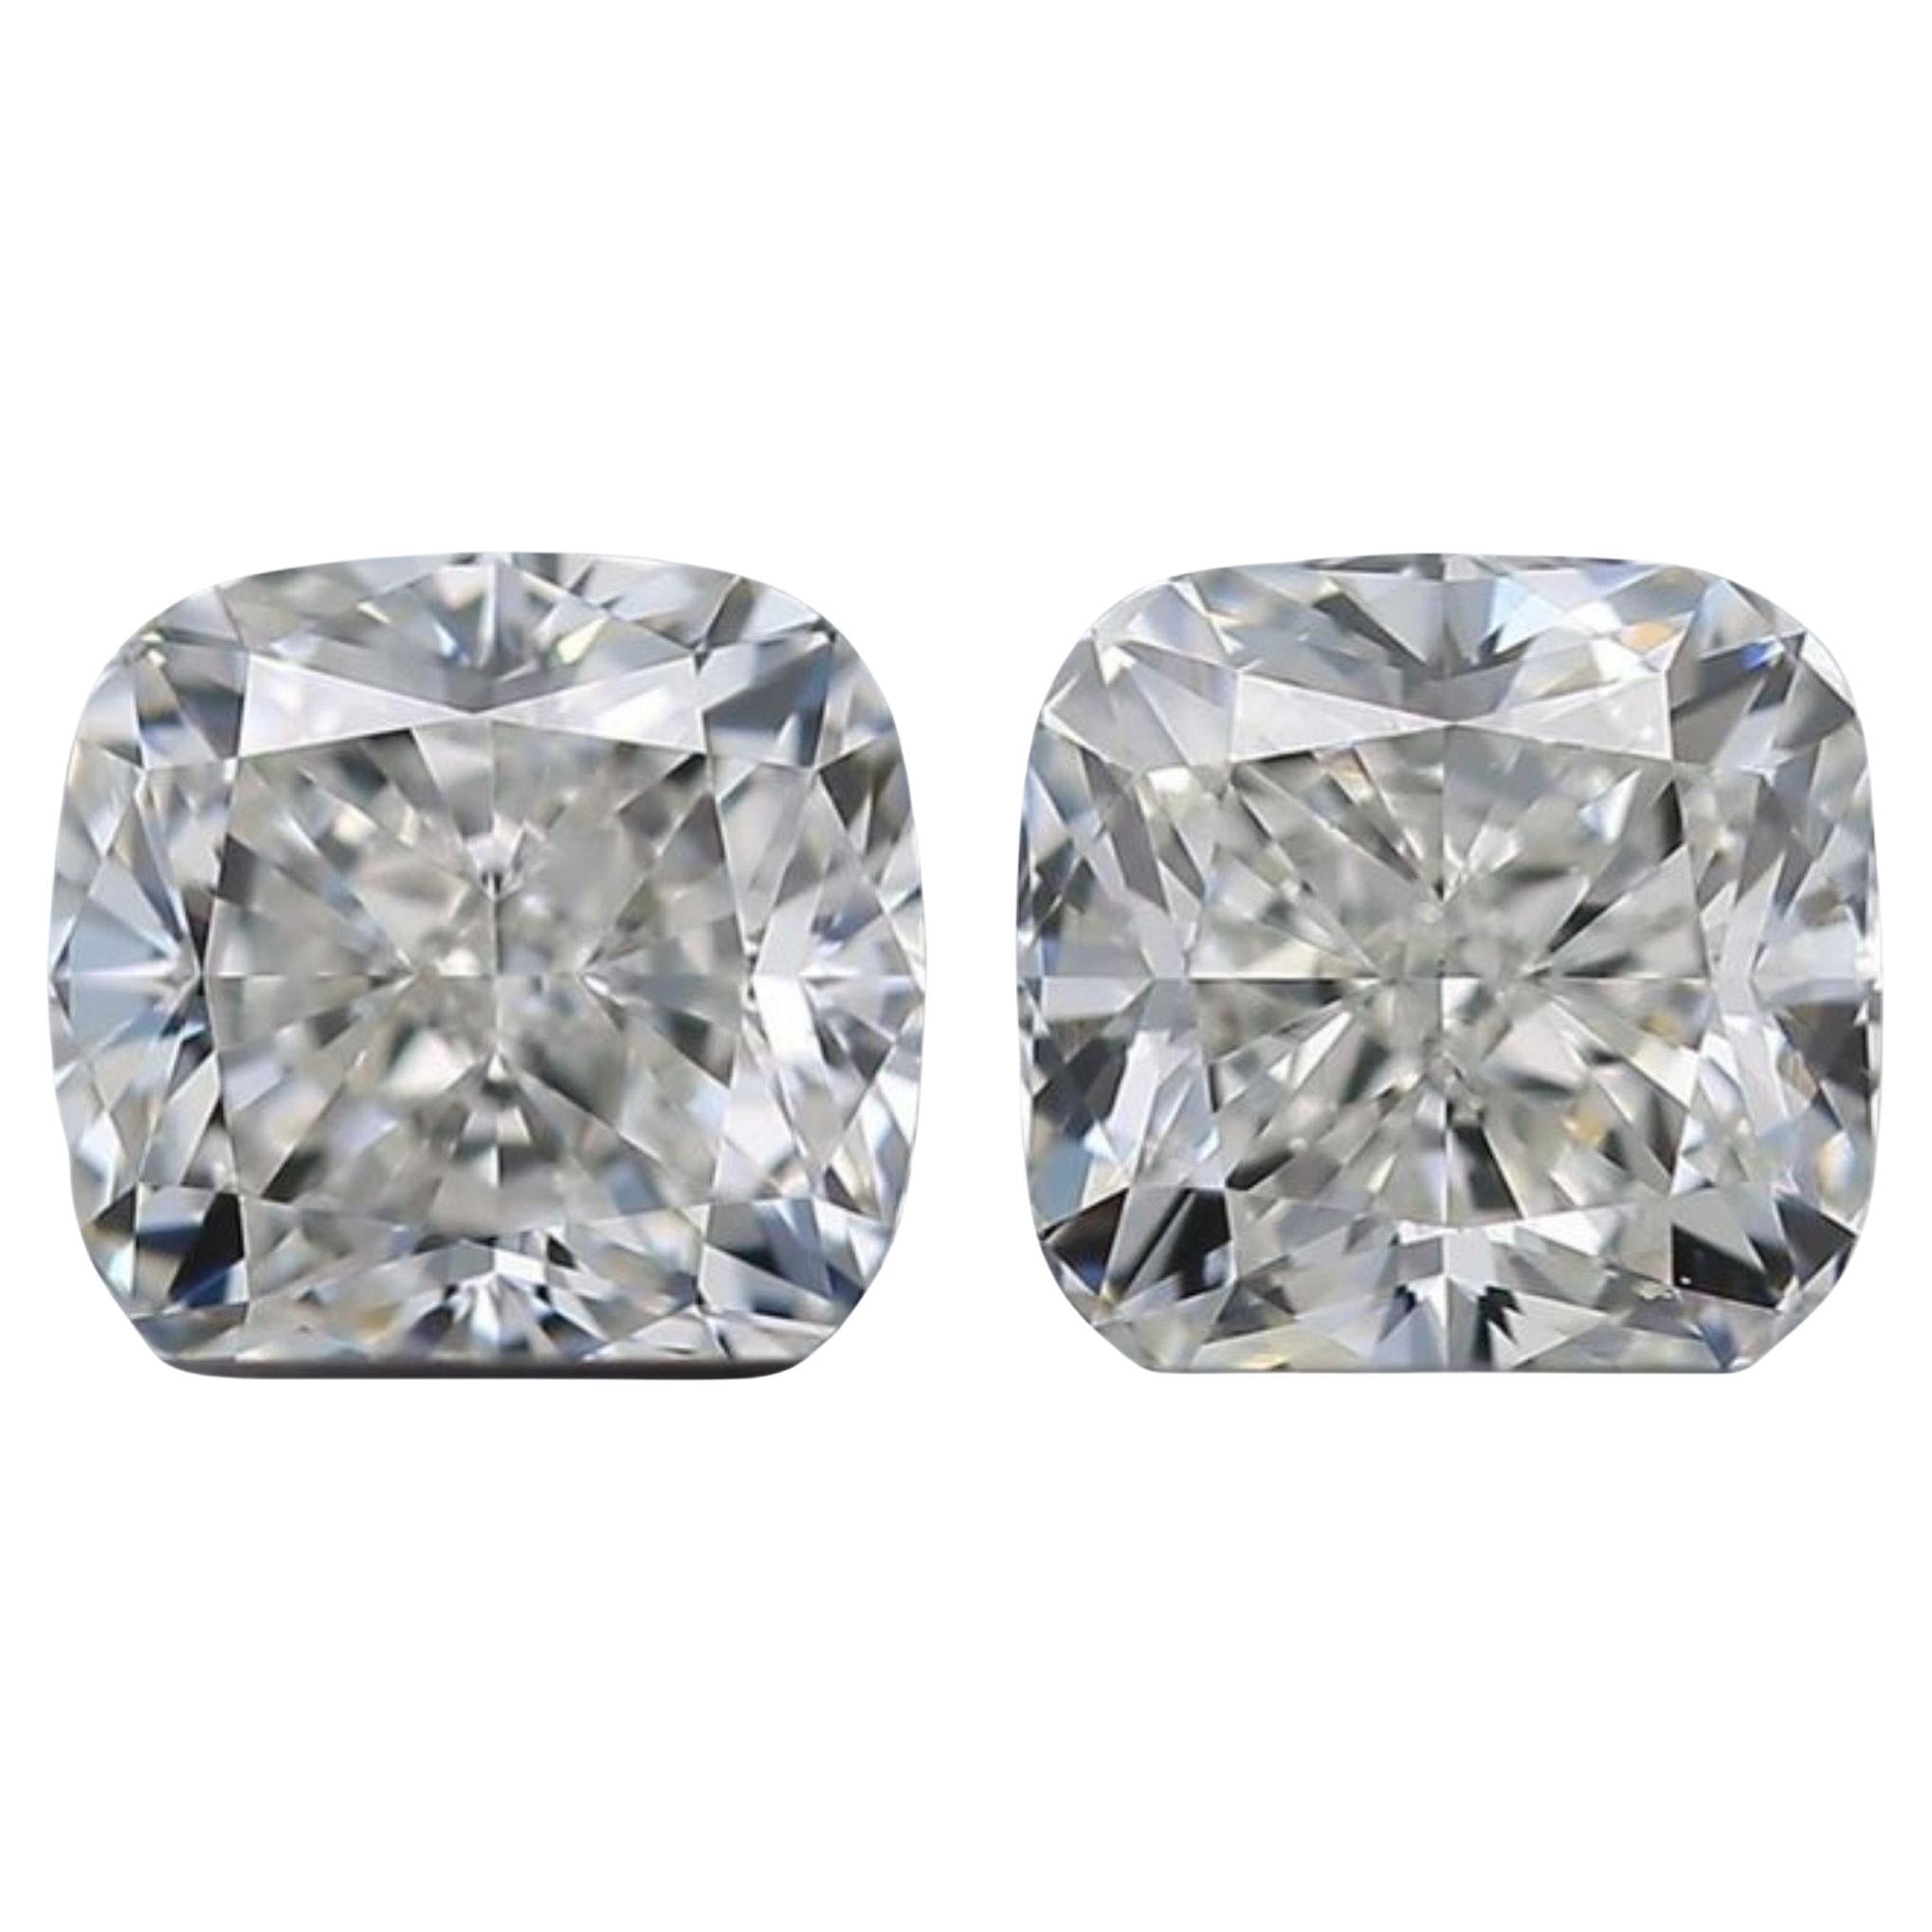 2 pcs Natural Diamonds - 1.01 ct - Cushion - G - VVS1, VS1- GIA Certificate